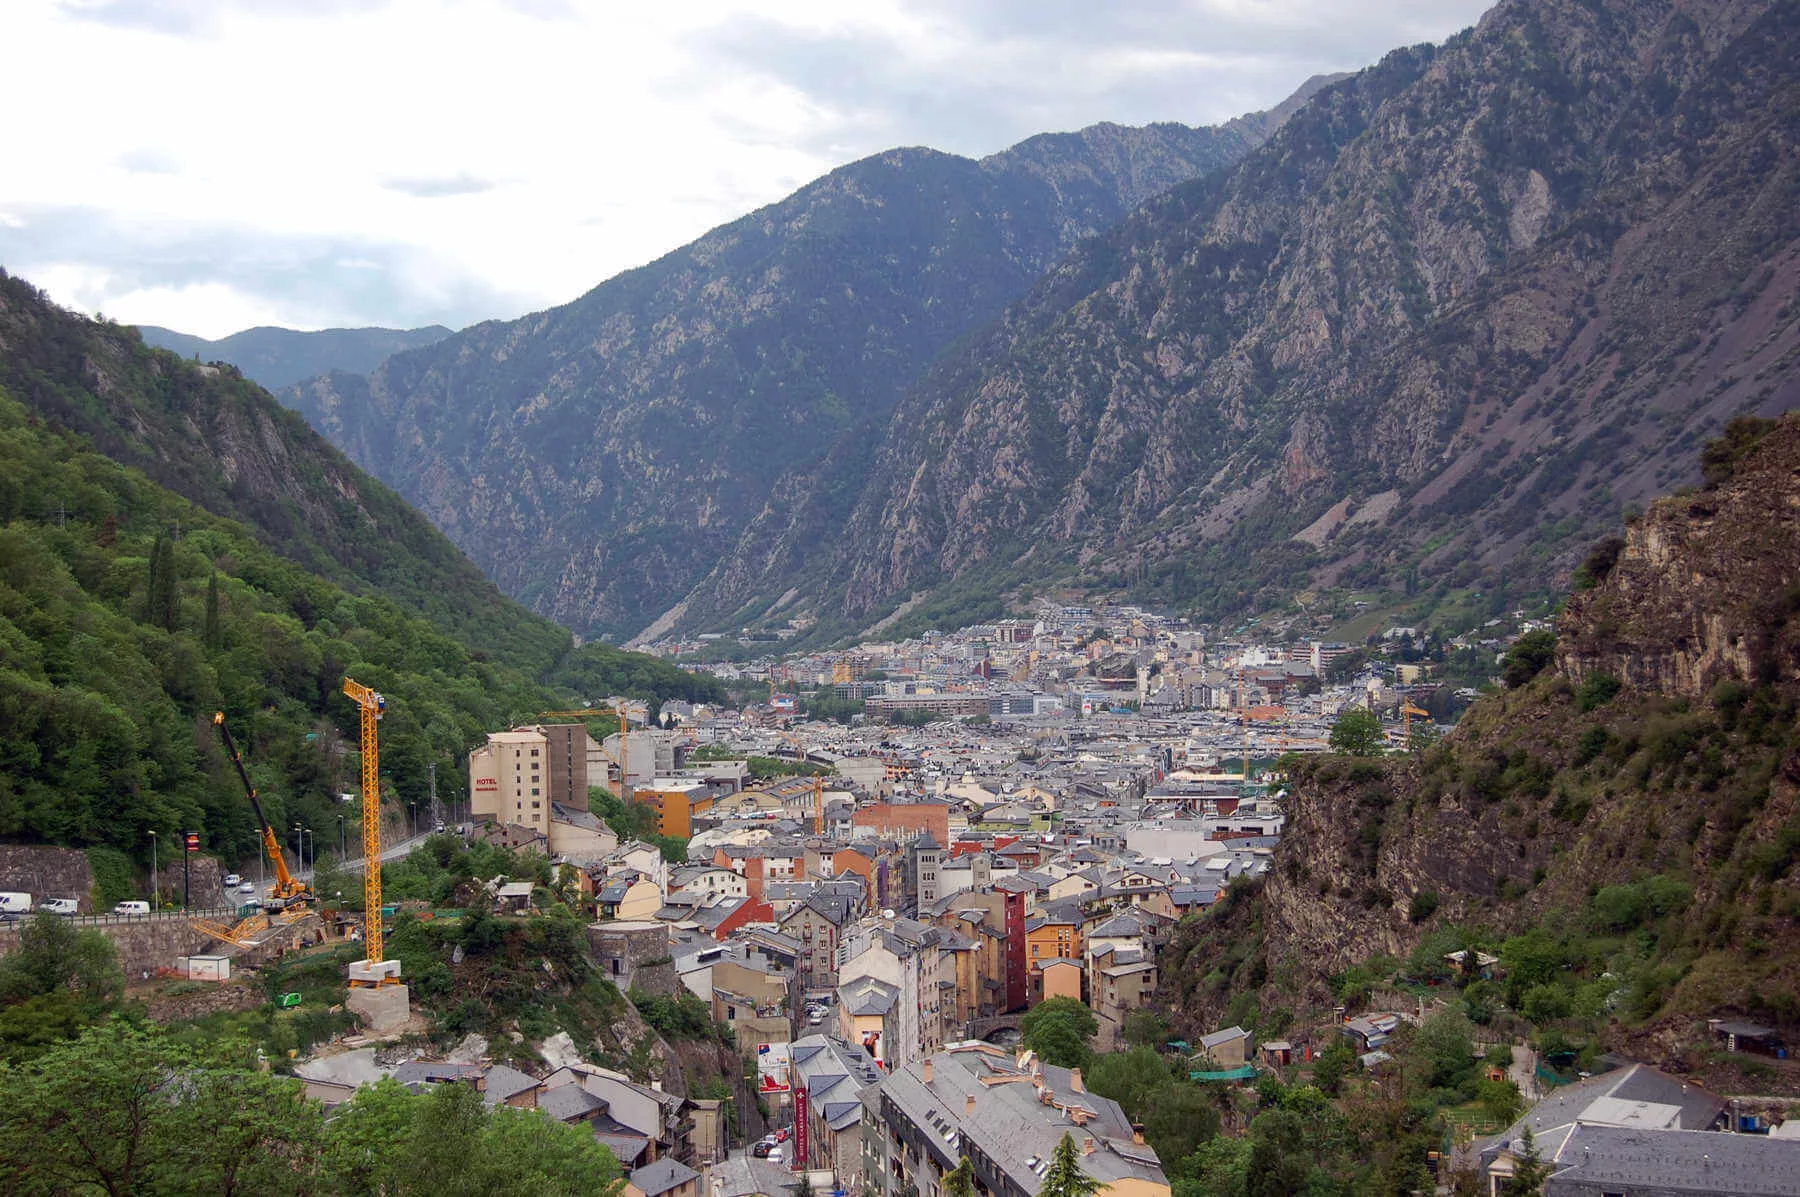 Andorra’s capital, Andorra la Vella, sits high in the Pyrenees